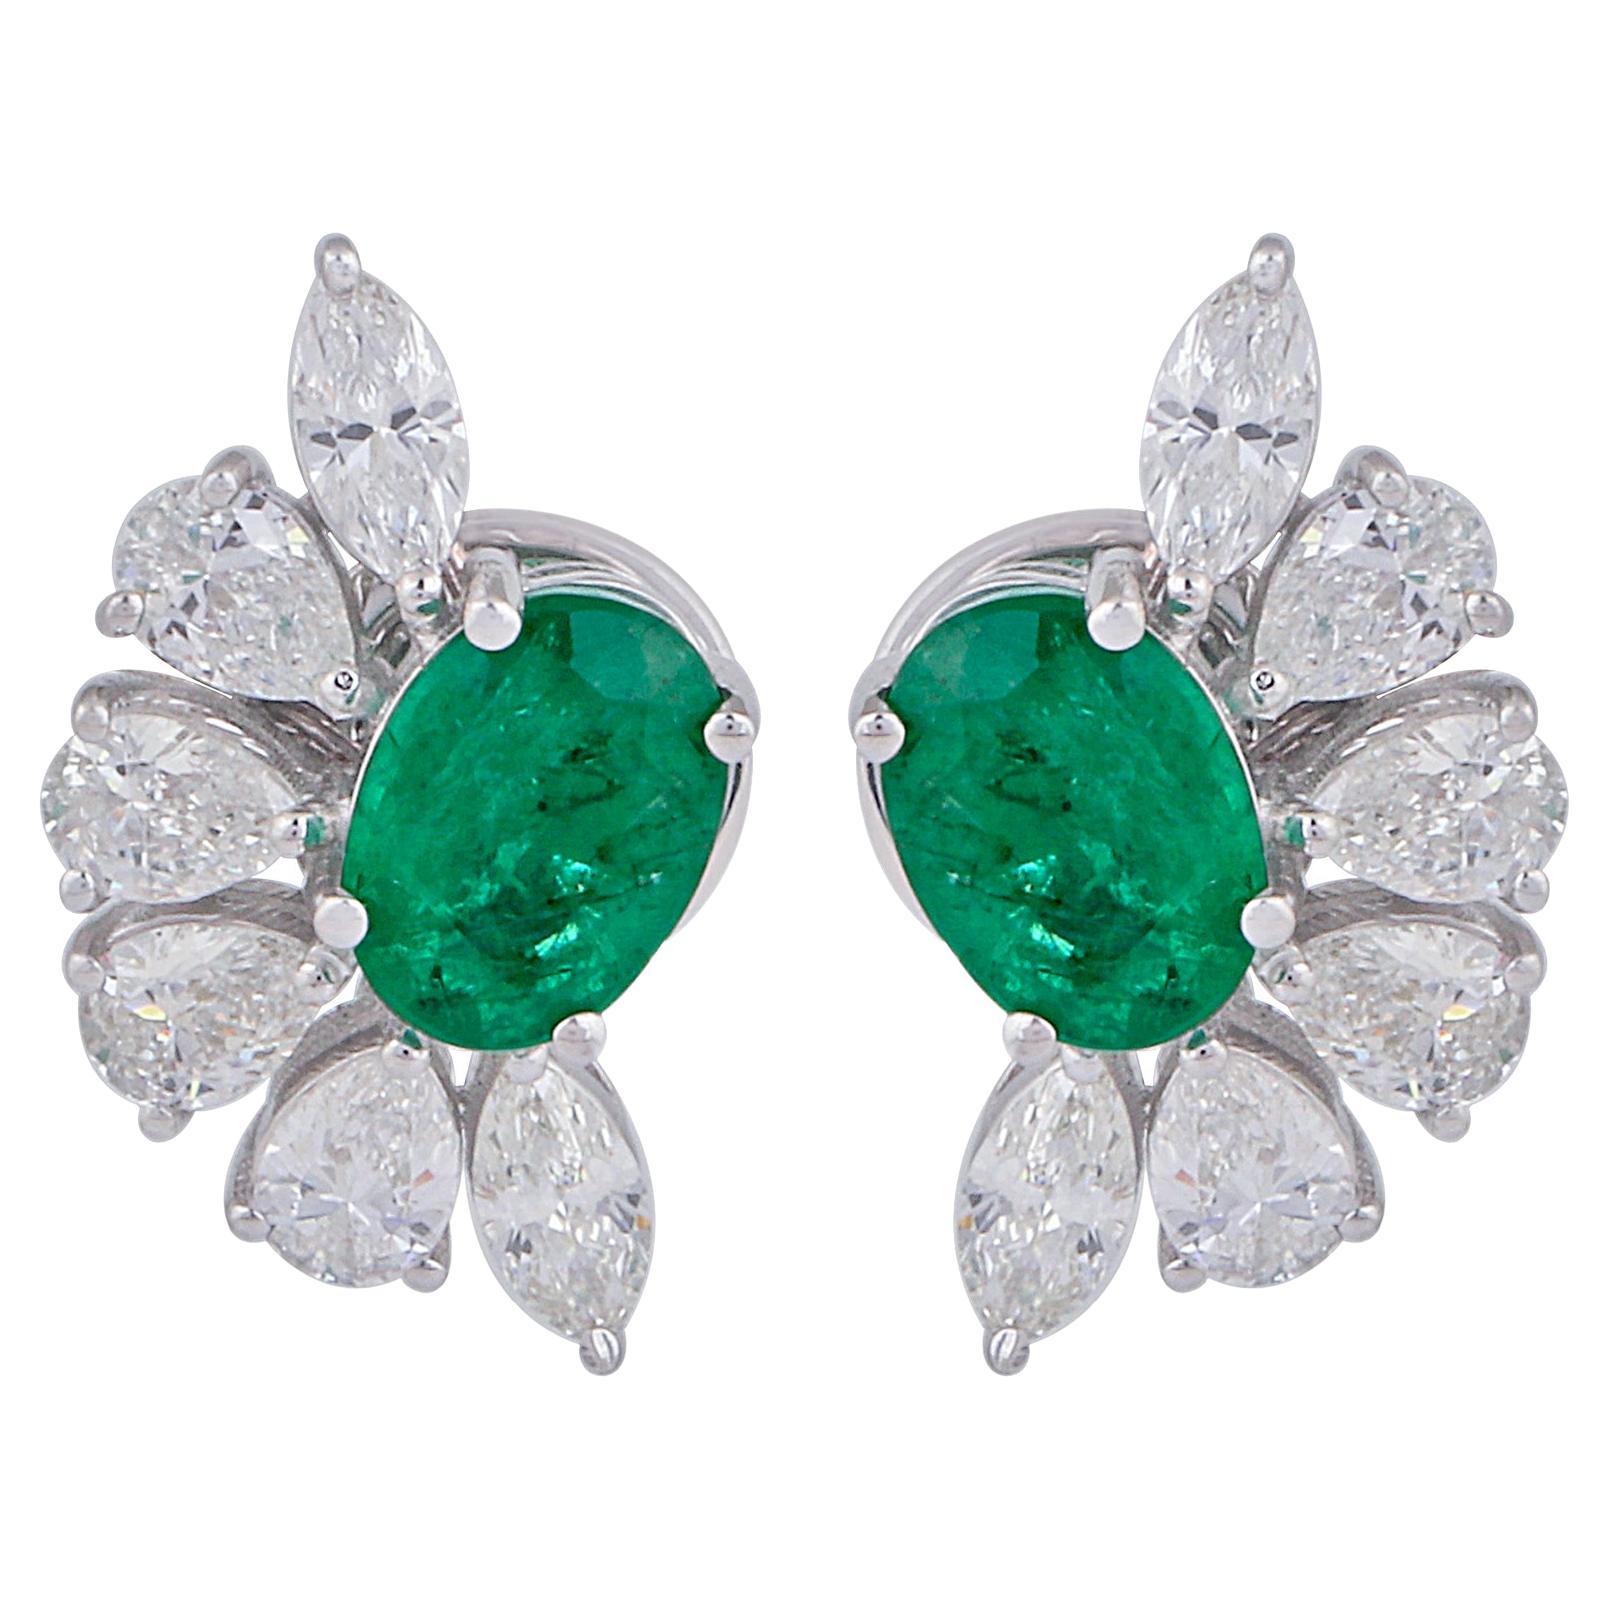 Oval Natural Emerald Gemstone Stud Earrings Diamond 14k White Gold Fine Jewelry